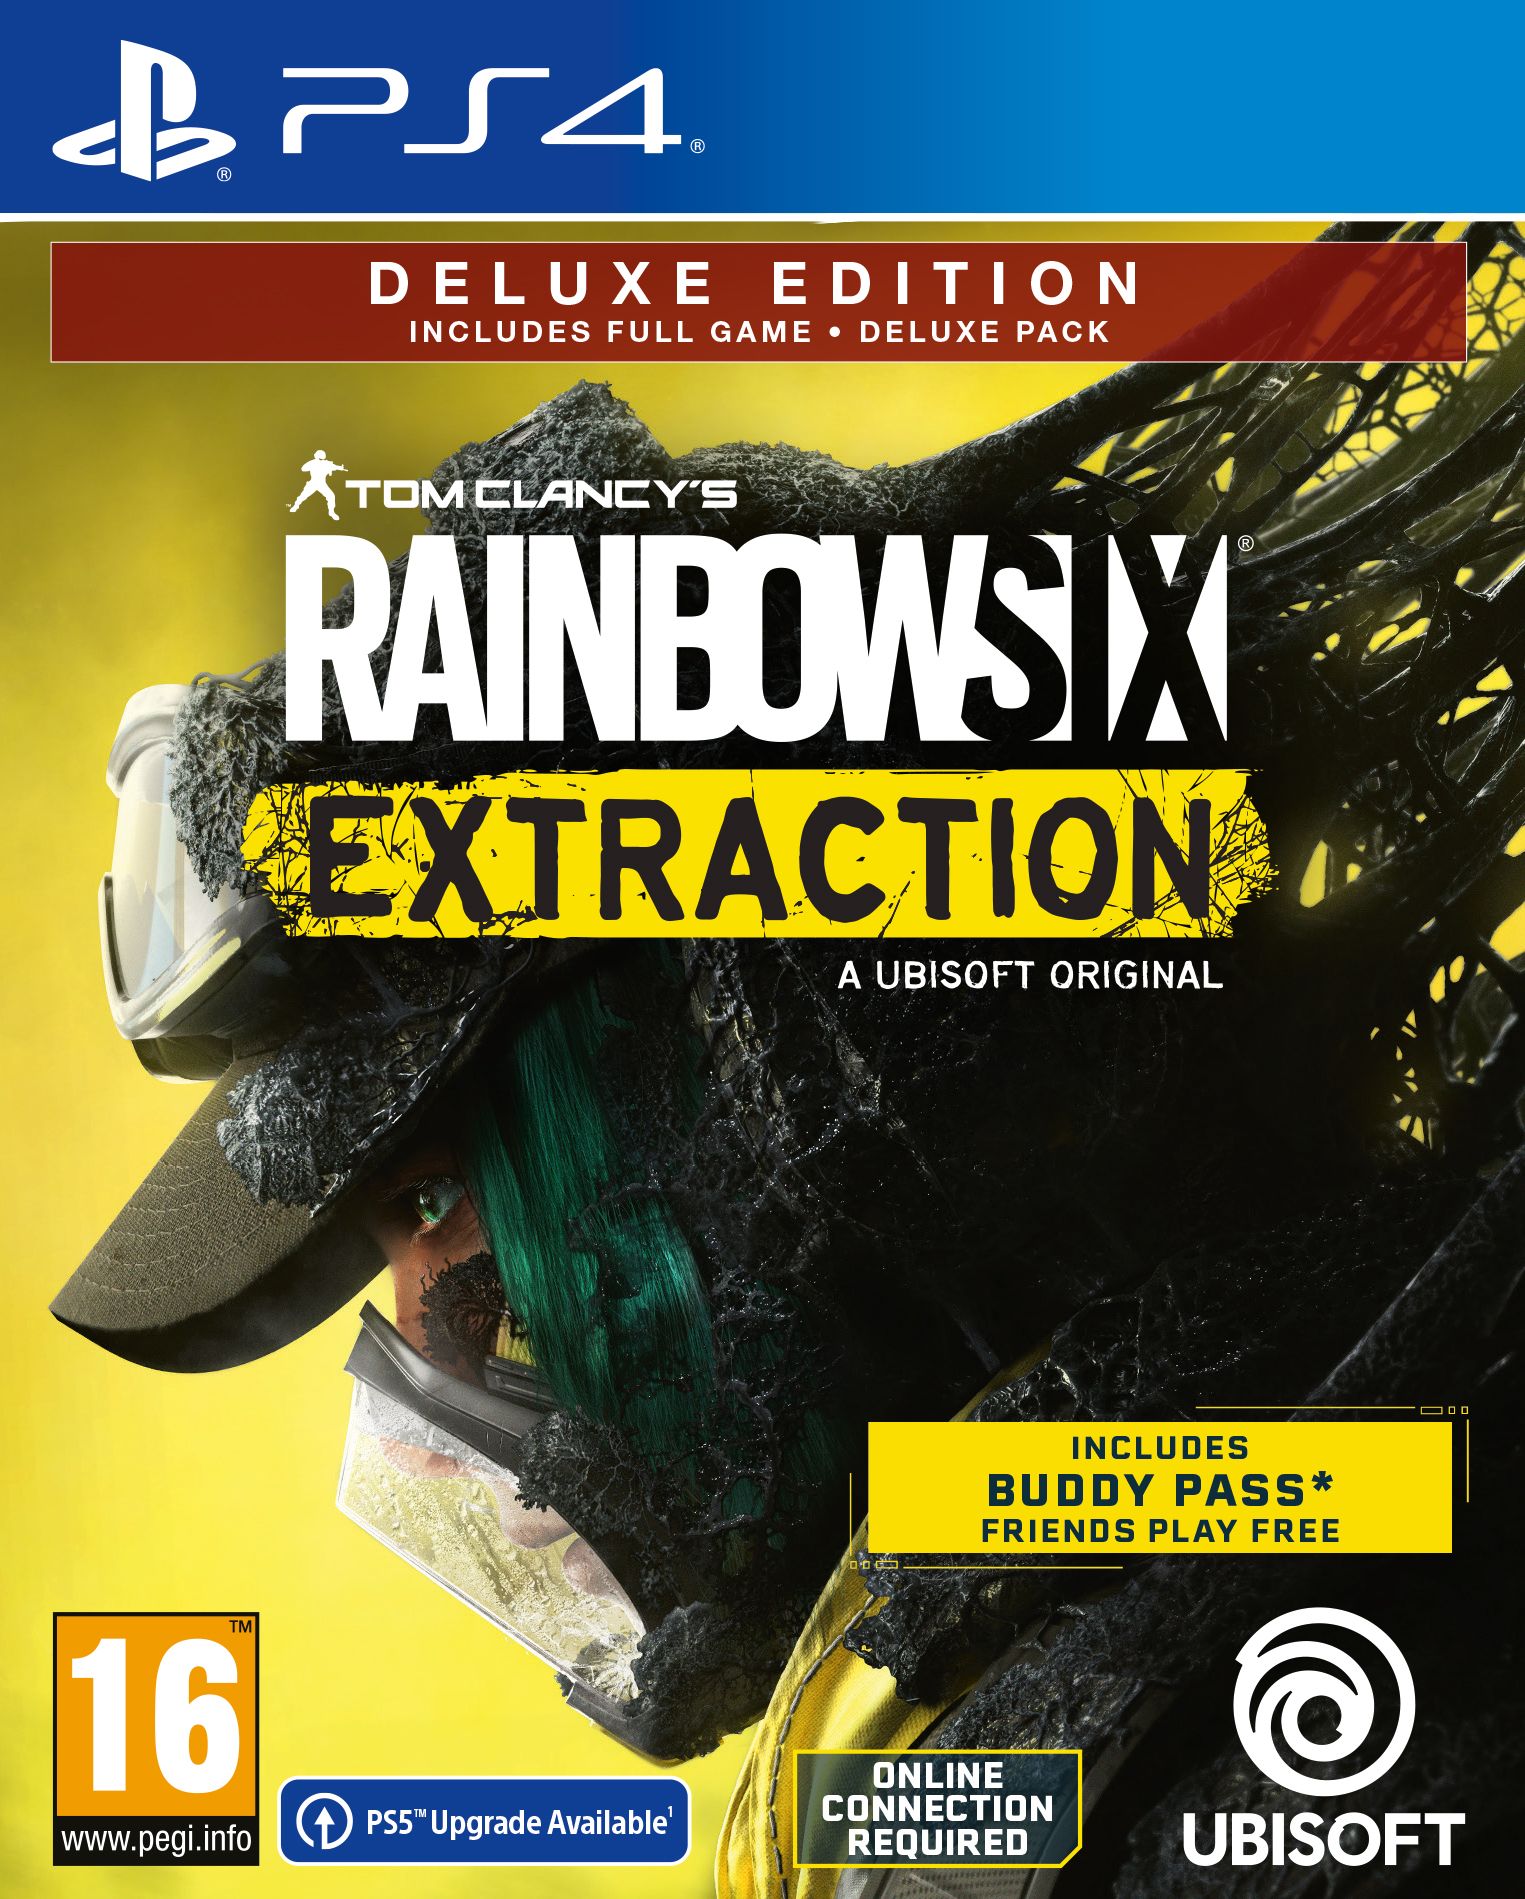 Tom Clancy's Rainbow six: Extraction (Deluxe Edition), Ubi Soft